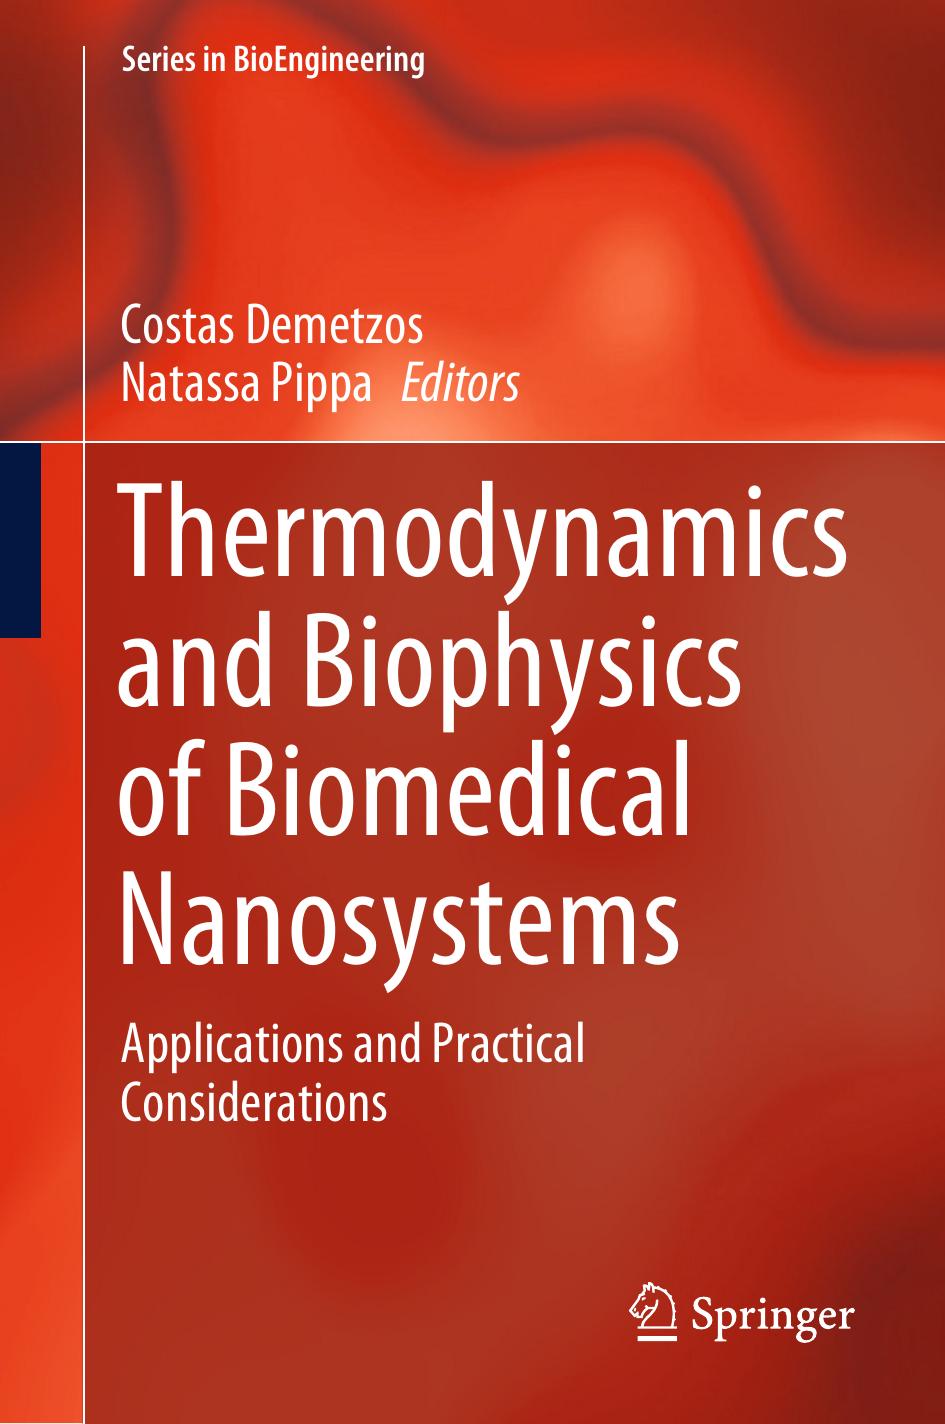 Thermodynamics and Biophysics 2019